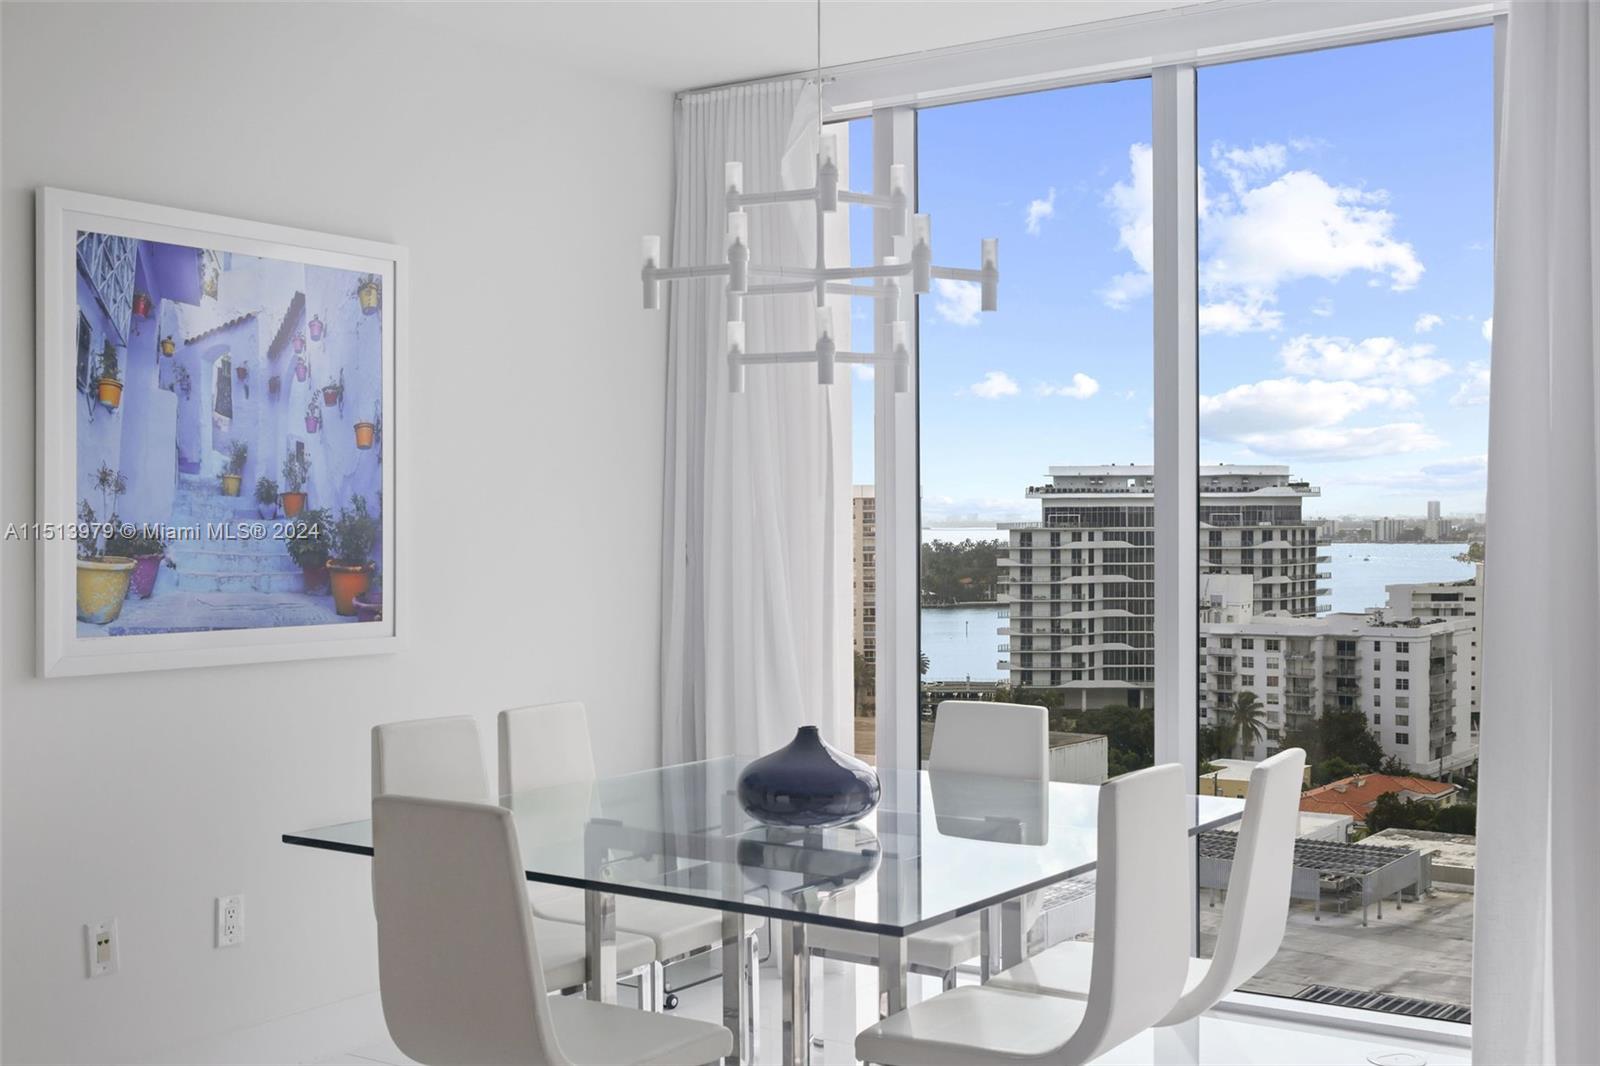 Rental Property at 6899 Collins Ave 1410, Miami Beach, Miami-Dade County, Florida - Bedrooms: 2 
Bathrooms: 2  - $7,000 MO.